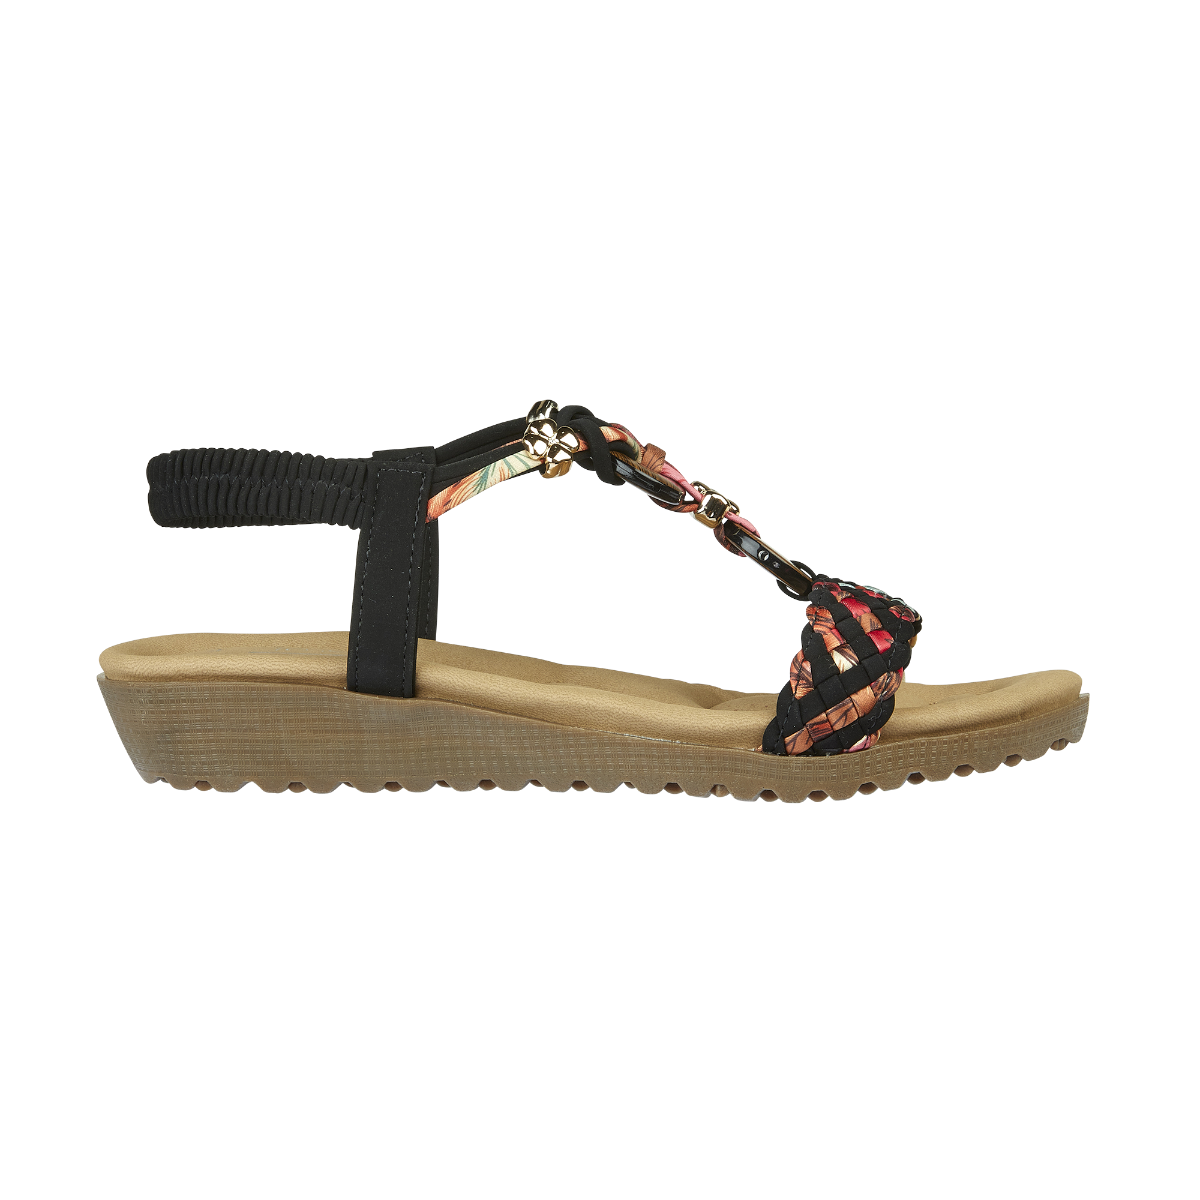 Marrakesh Black Wedges Sandals